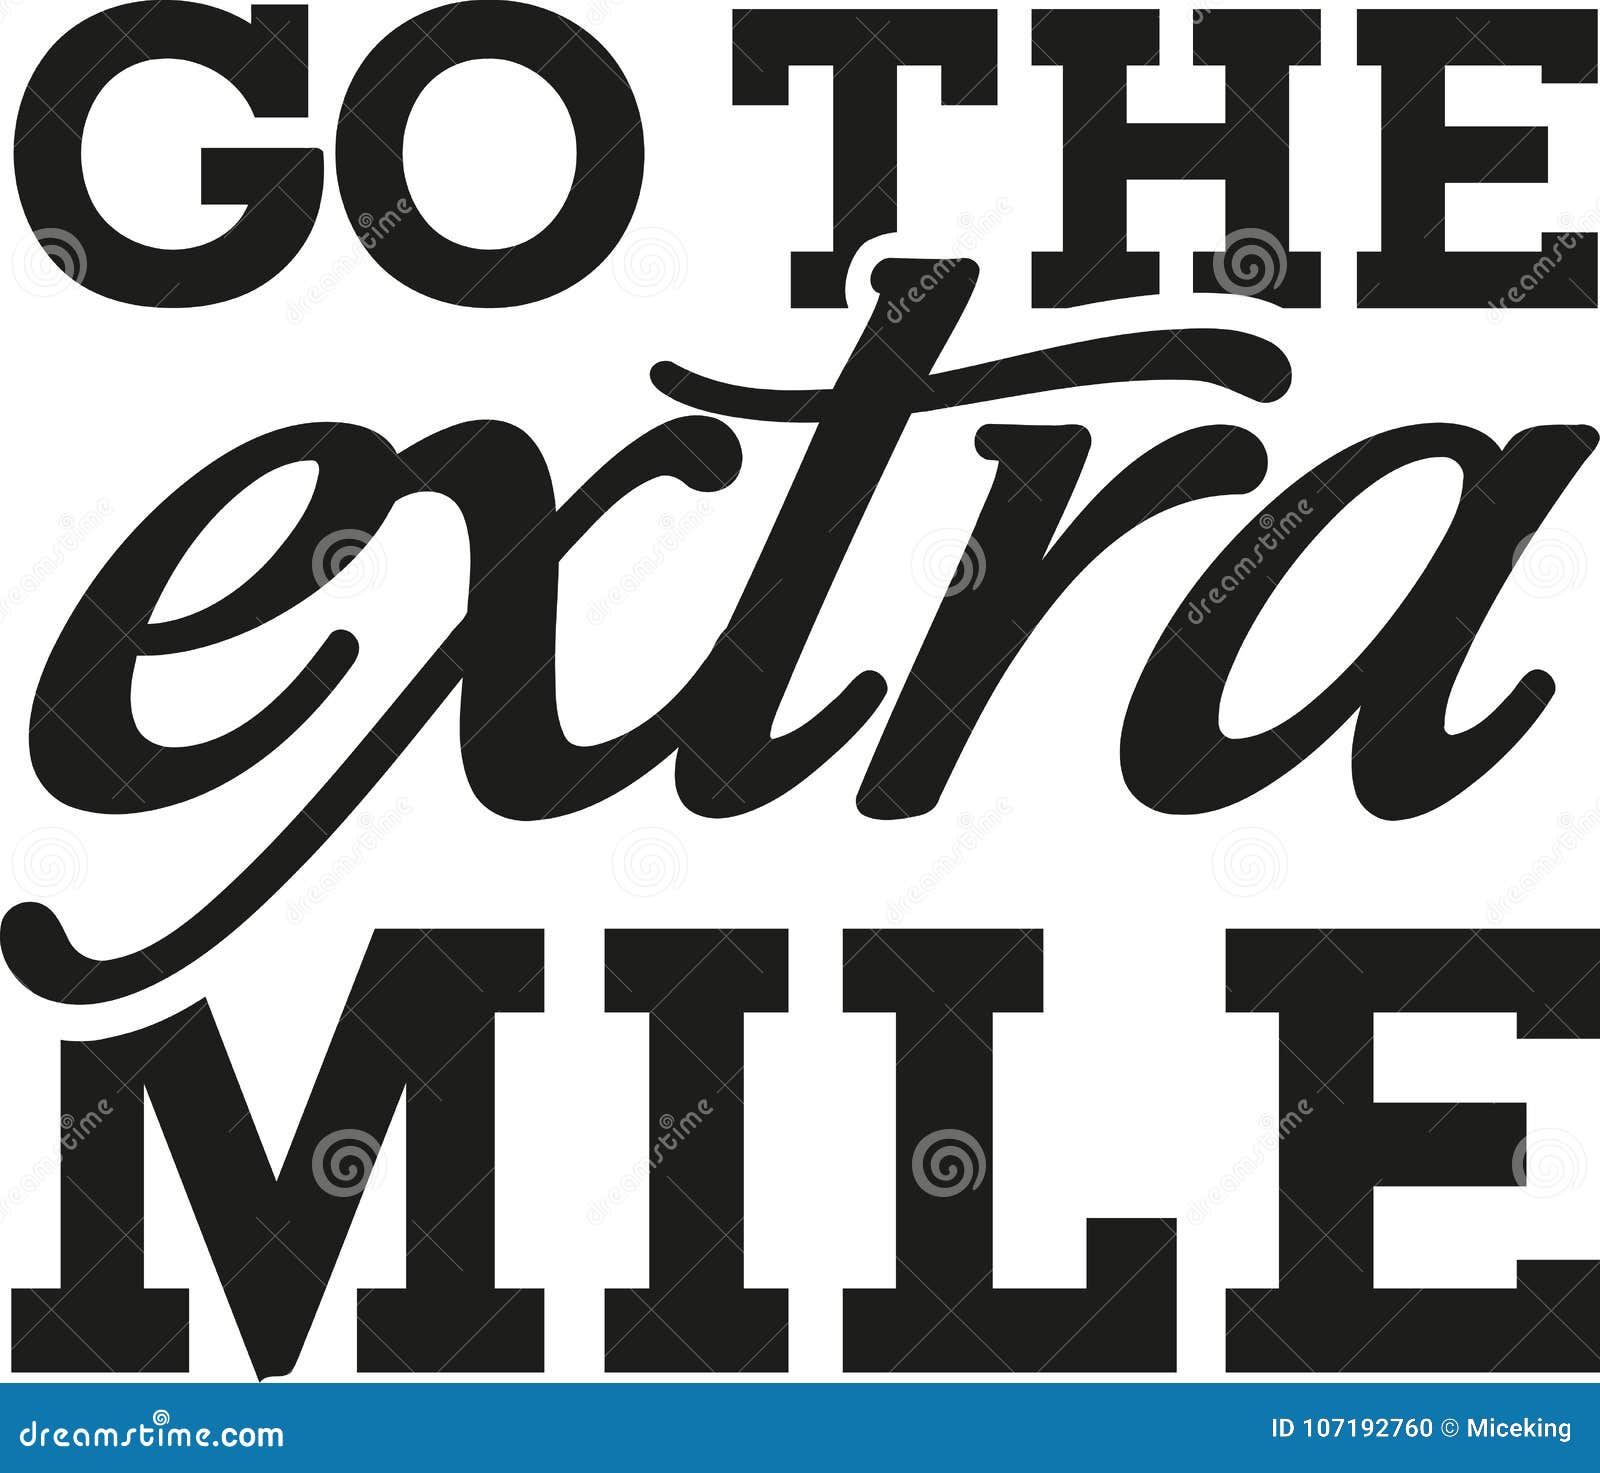 go the extra mile - motivational saying